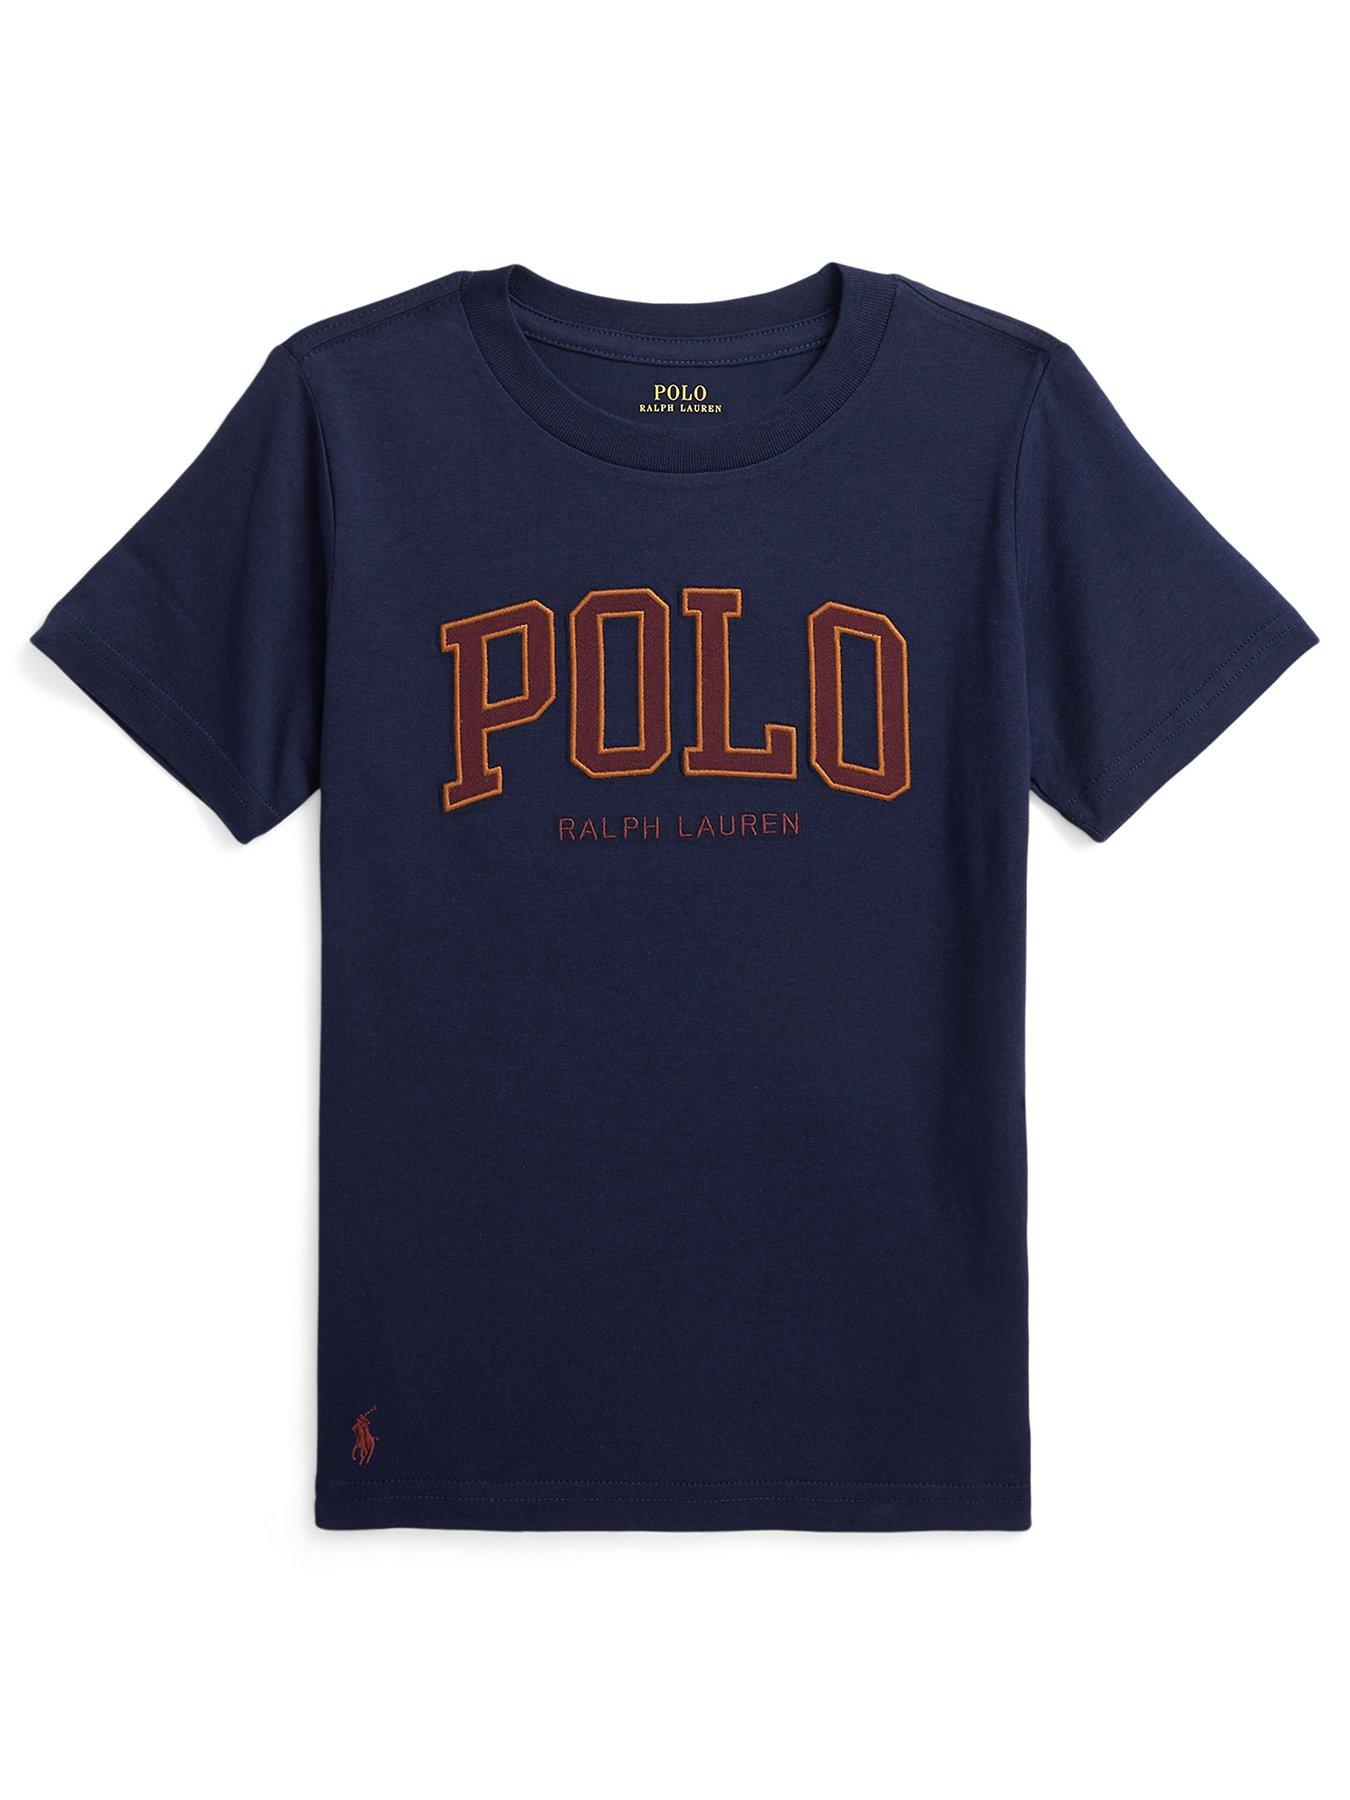 Polo Ralph Lauren Crew Neck T-Shirt Black Marl Heather at